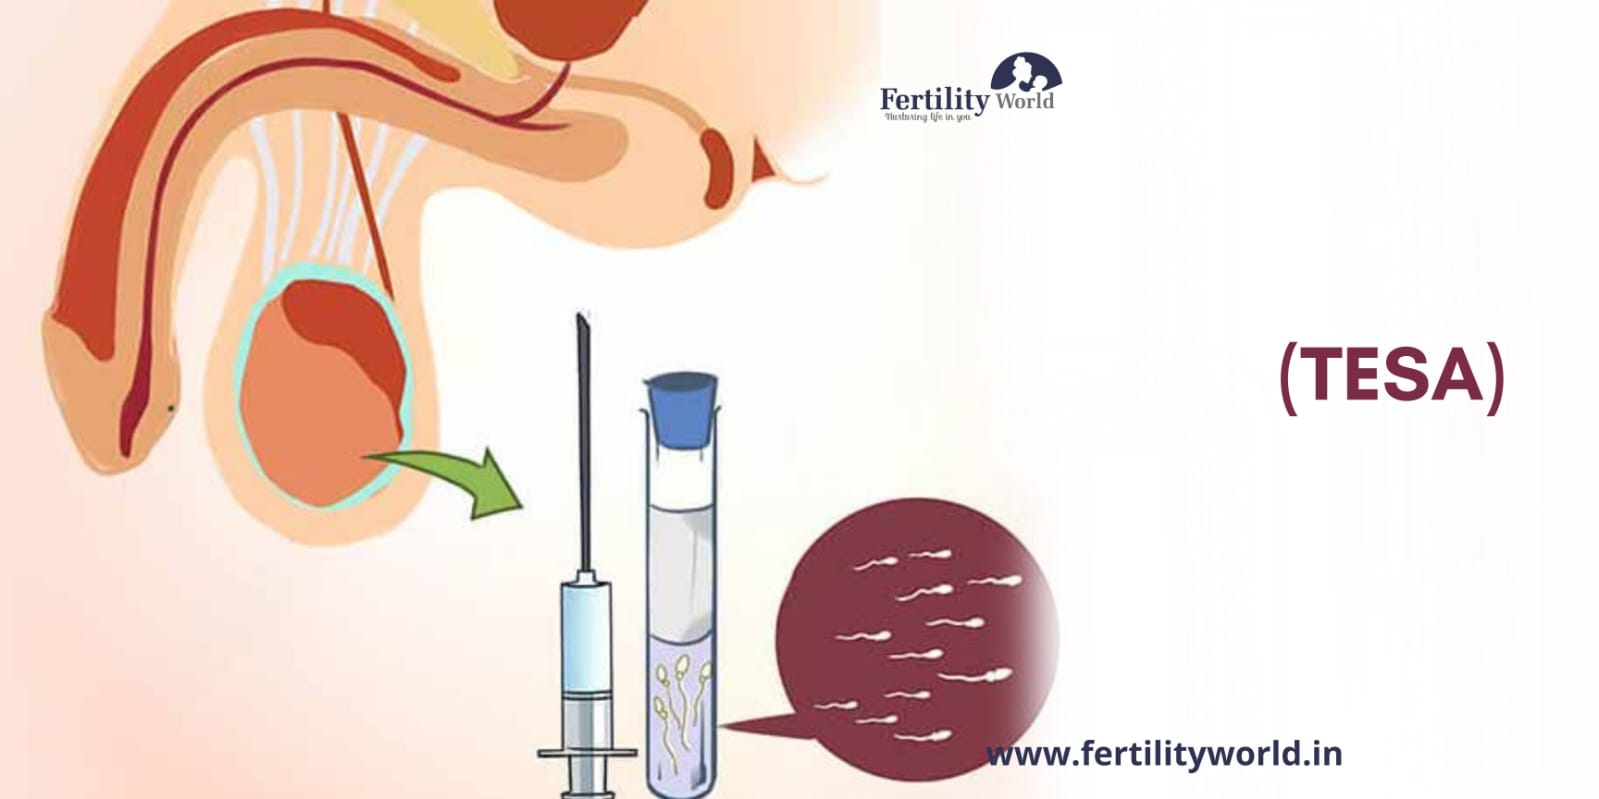 IVF with TESA treatment